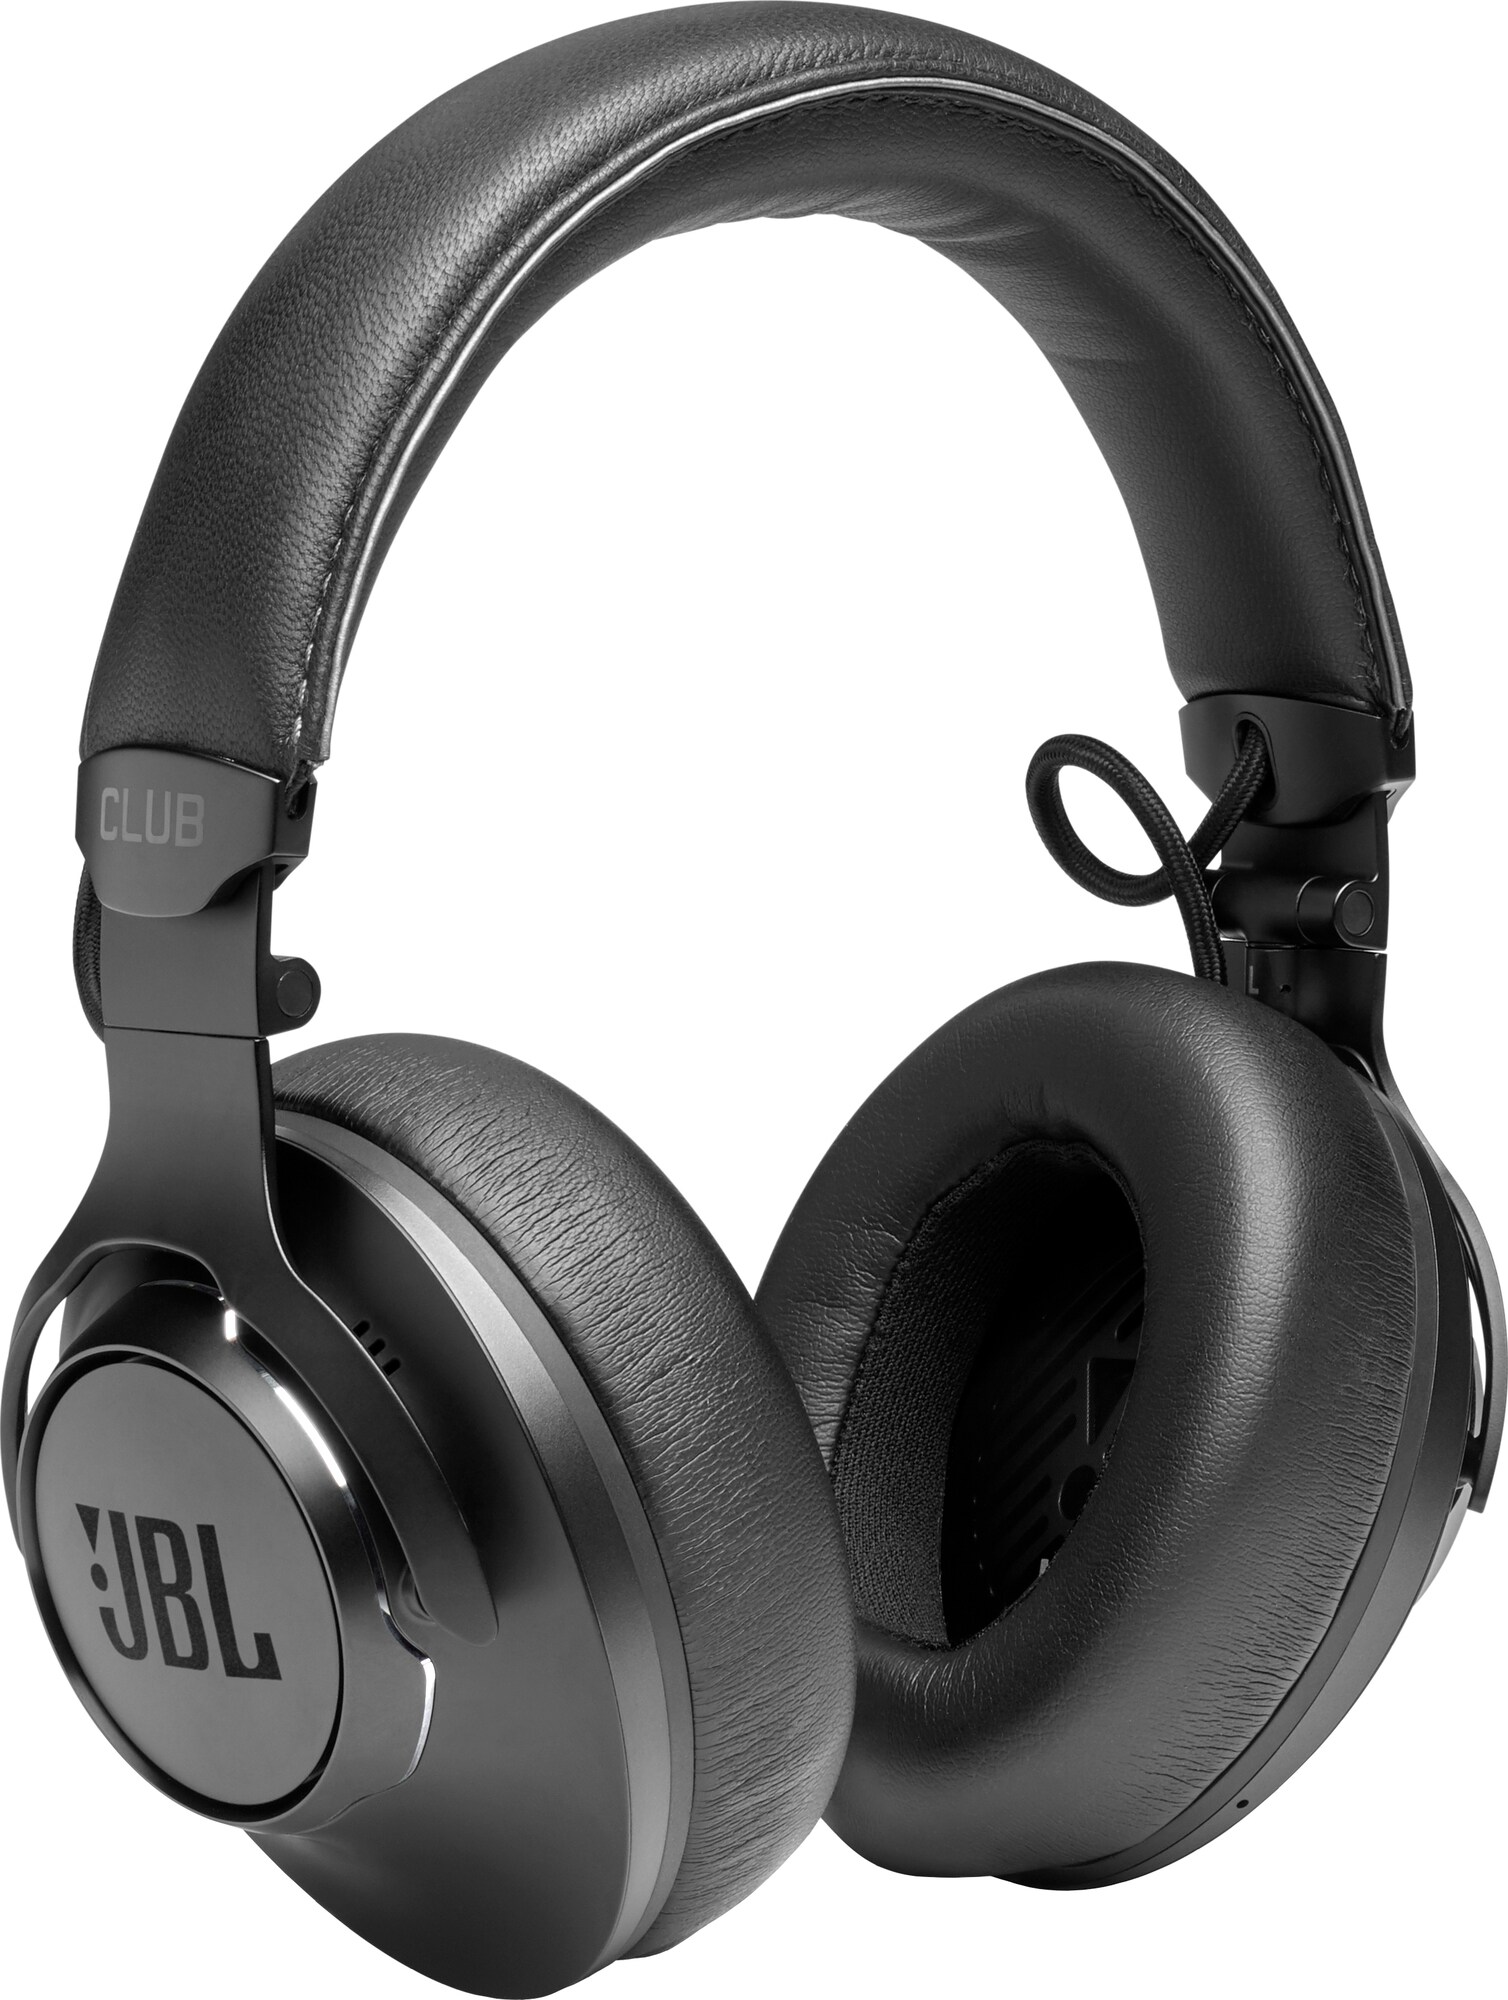 JBL CLUB ONE trådløse around-ear hodetelefoner (sort) - Hodetelefoner -  Elkjøp